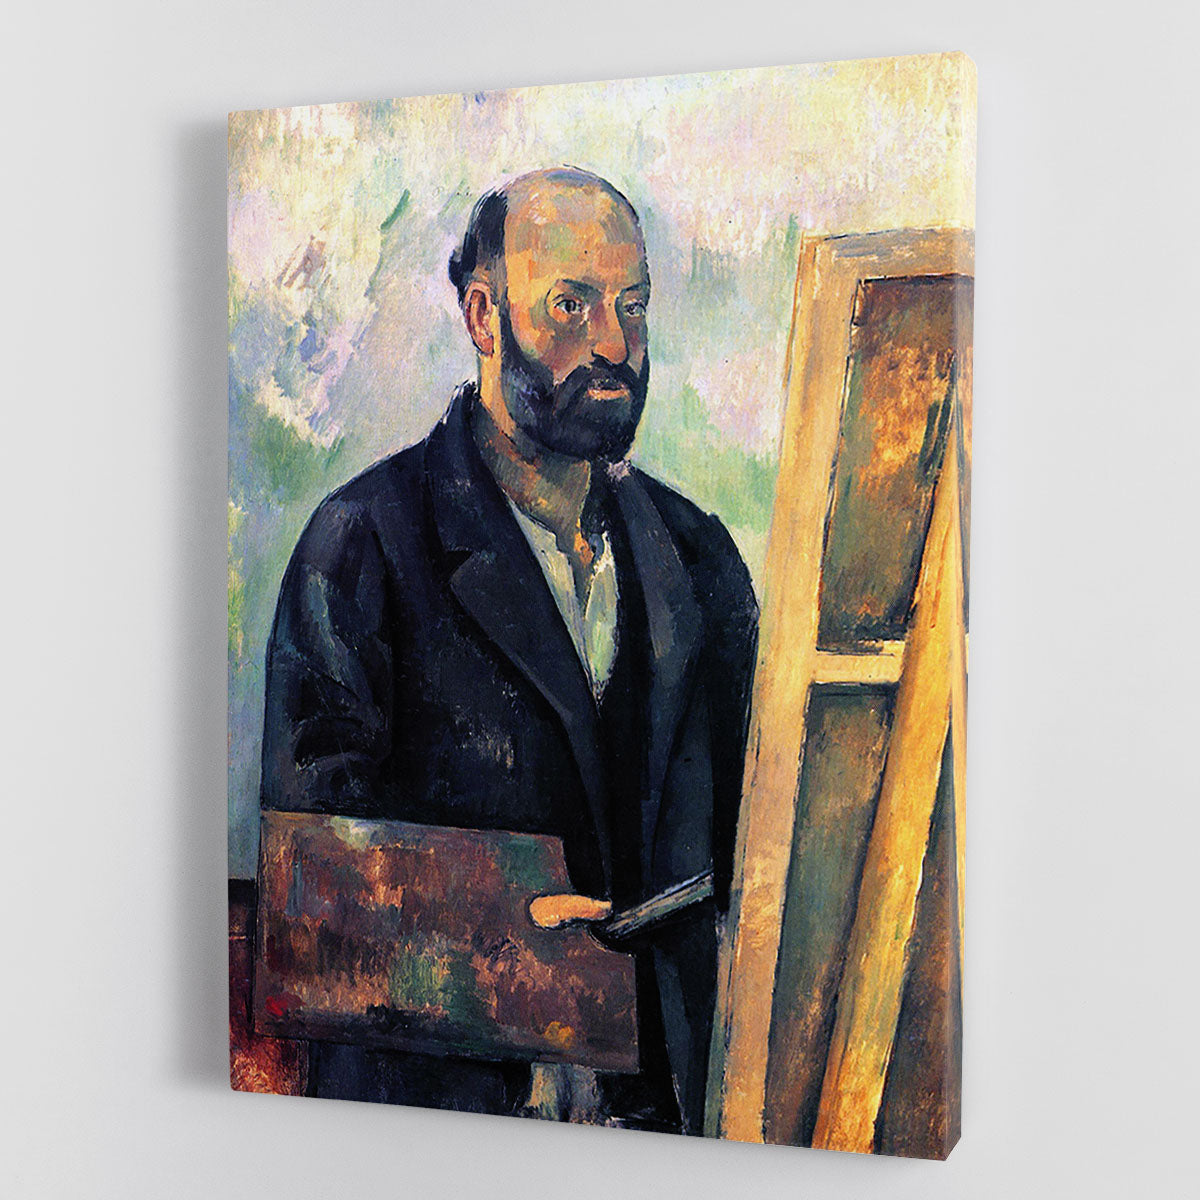 Self-portrait with Pallette by Cezanne Canvas Print or Poster - Canvas Art Rocks - 1